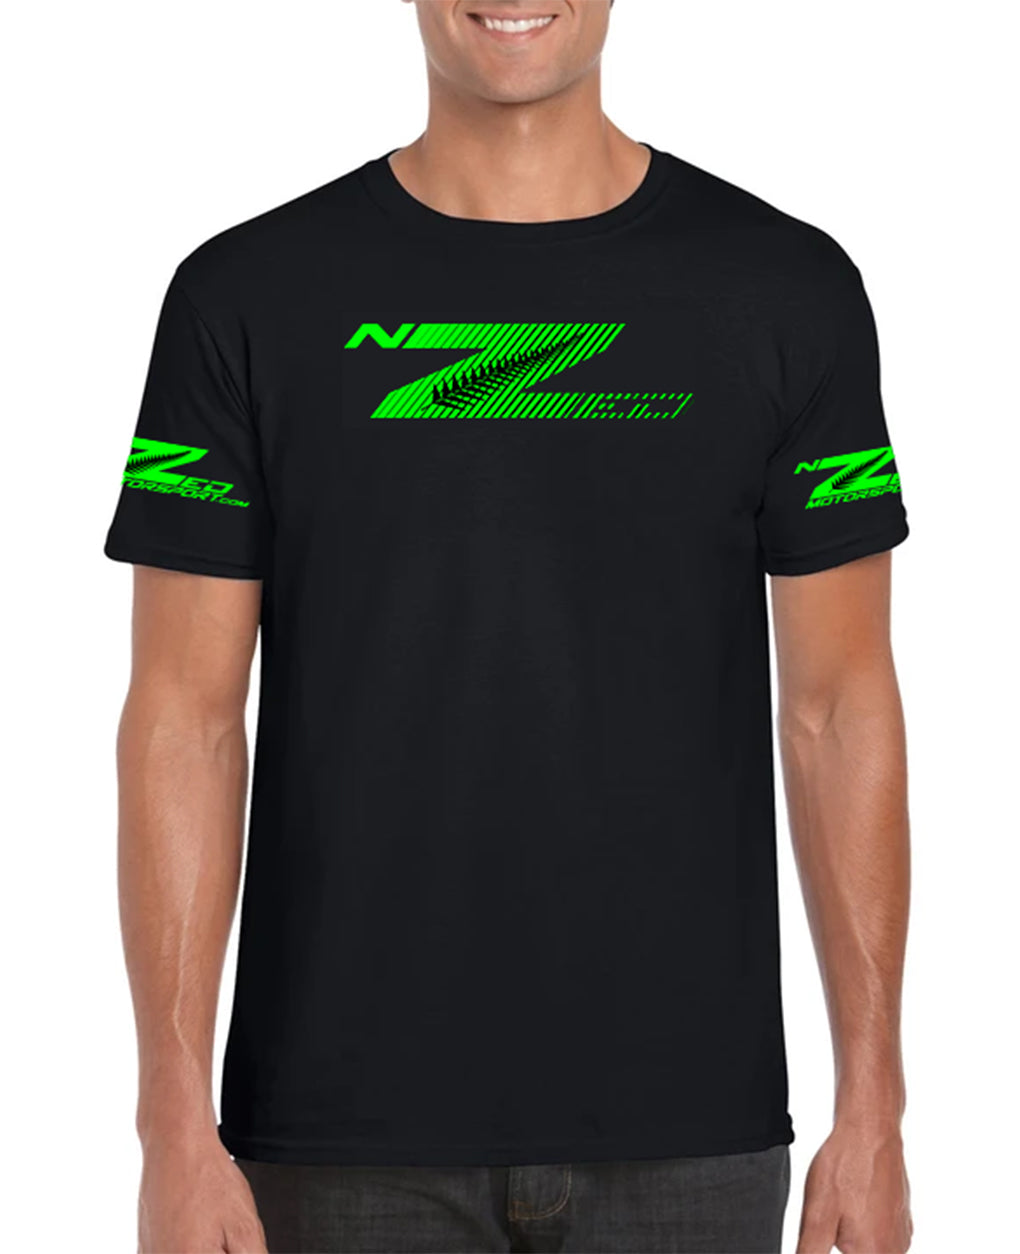 Clothing – n-zed motorsport